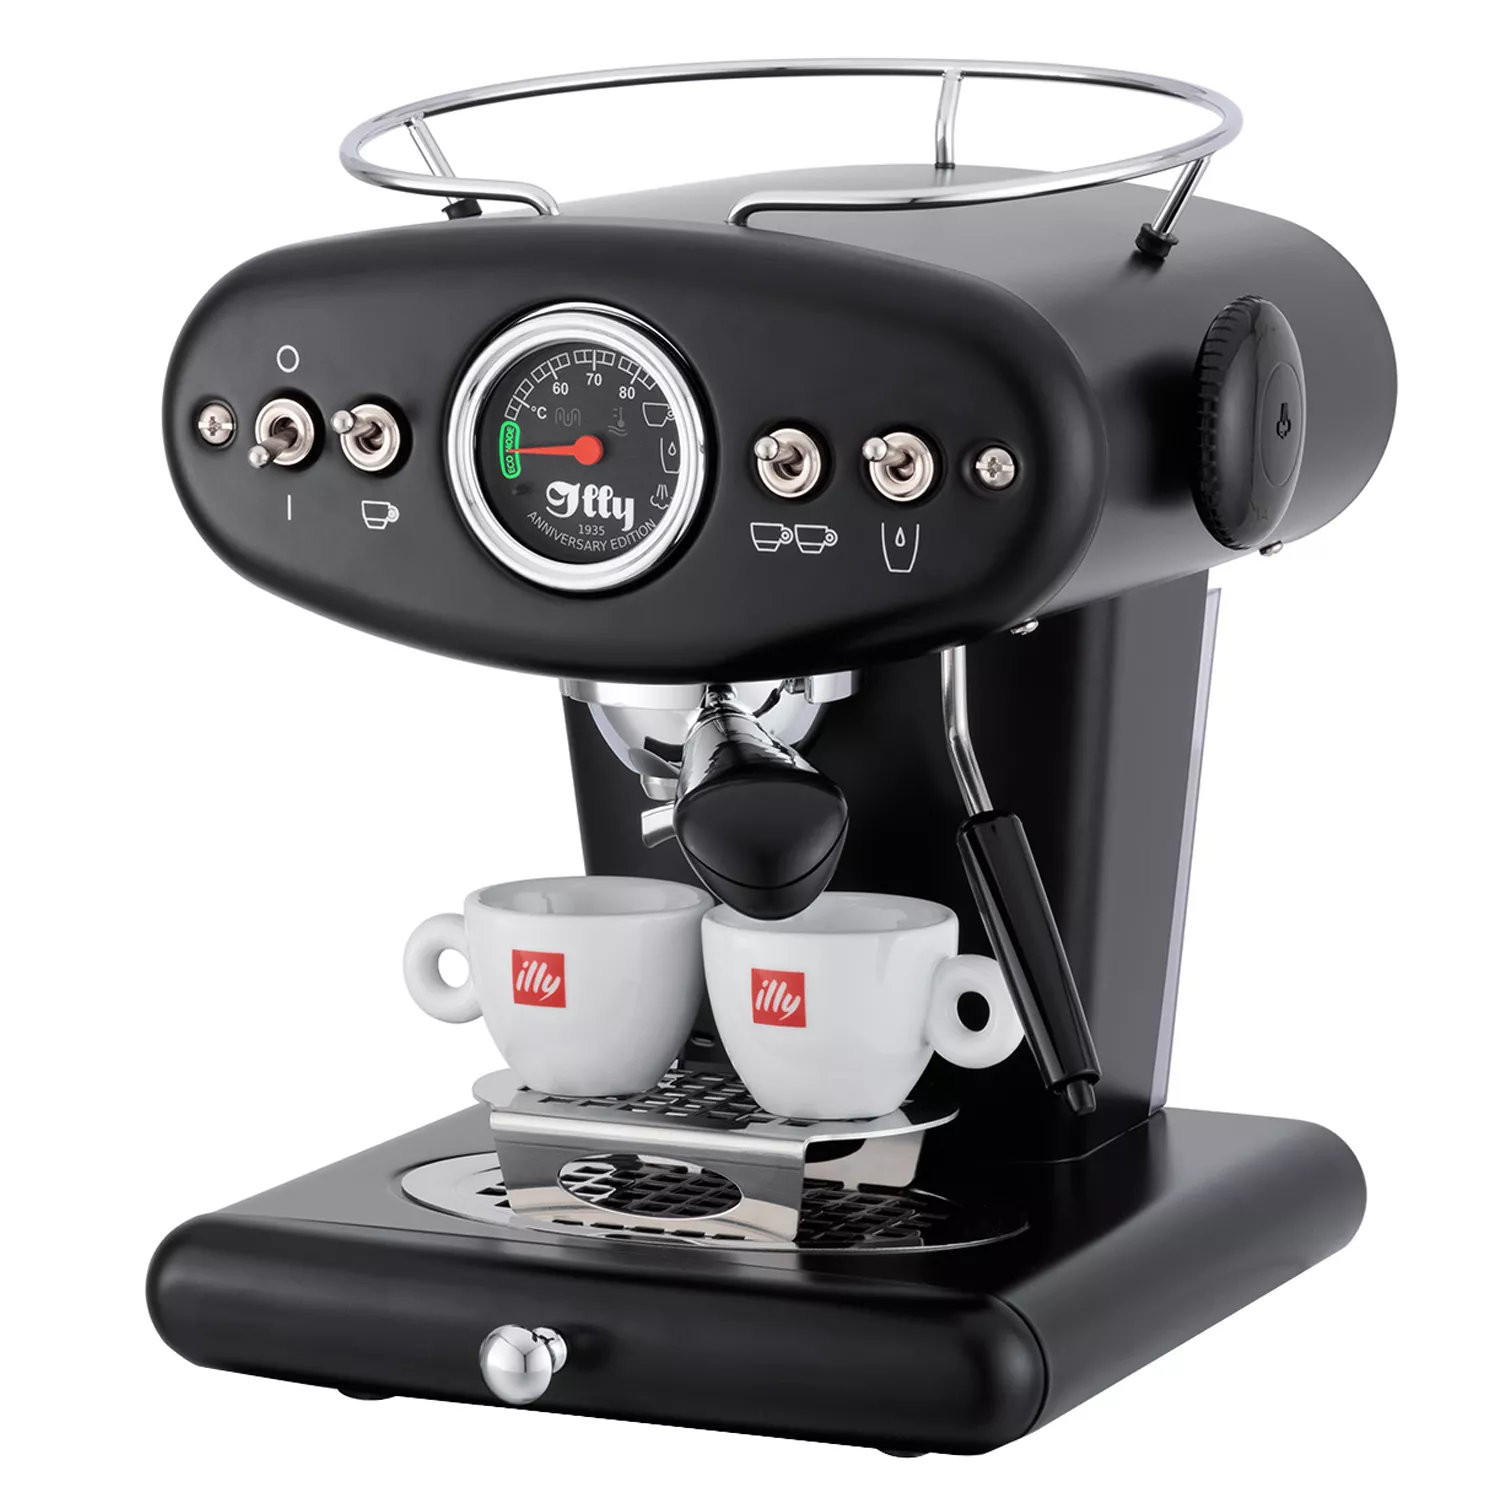 Espresso Machines & Italian Coffee Makers - illy Shop